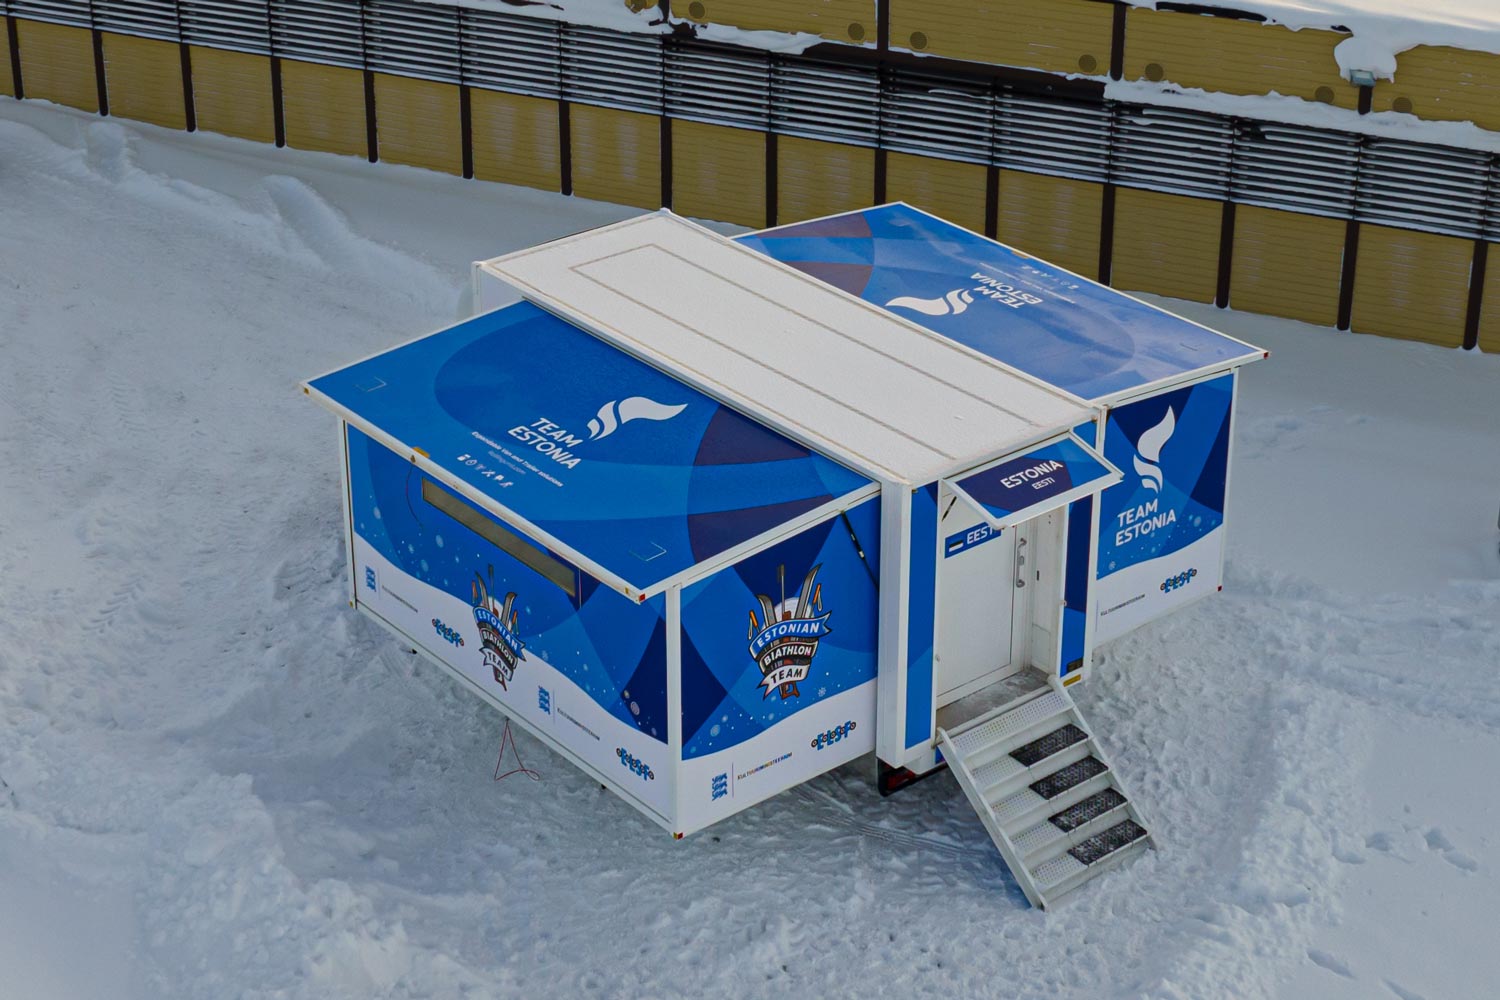 Estonian Biathlon Association Ski-service Truck